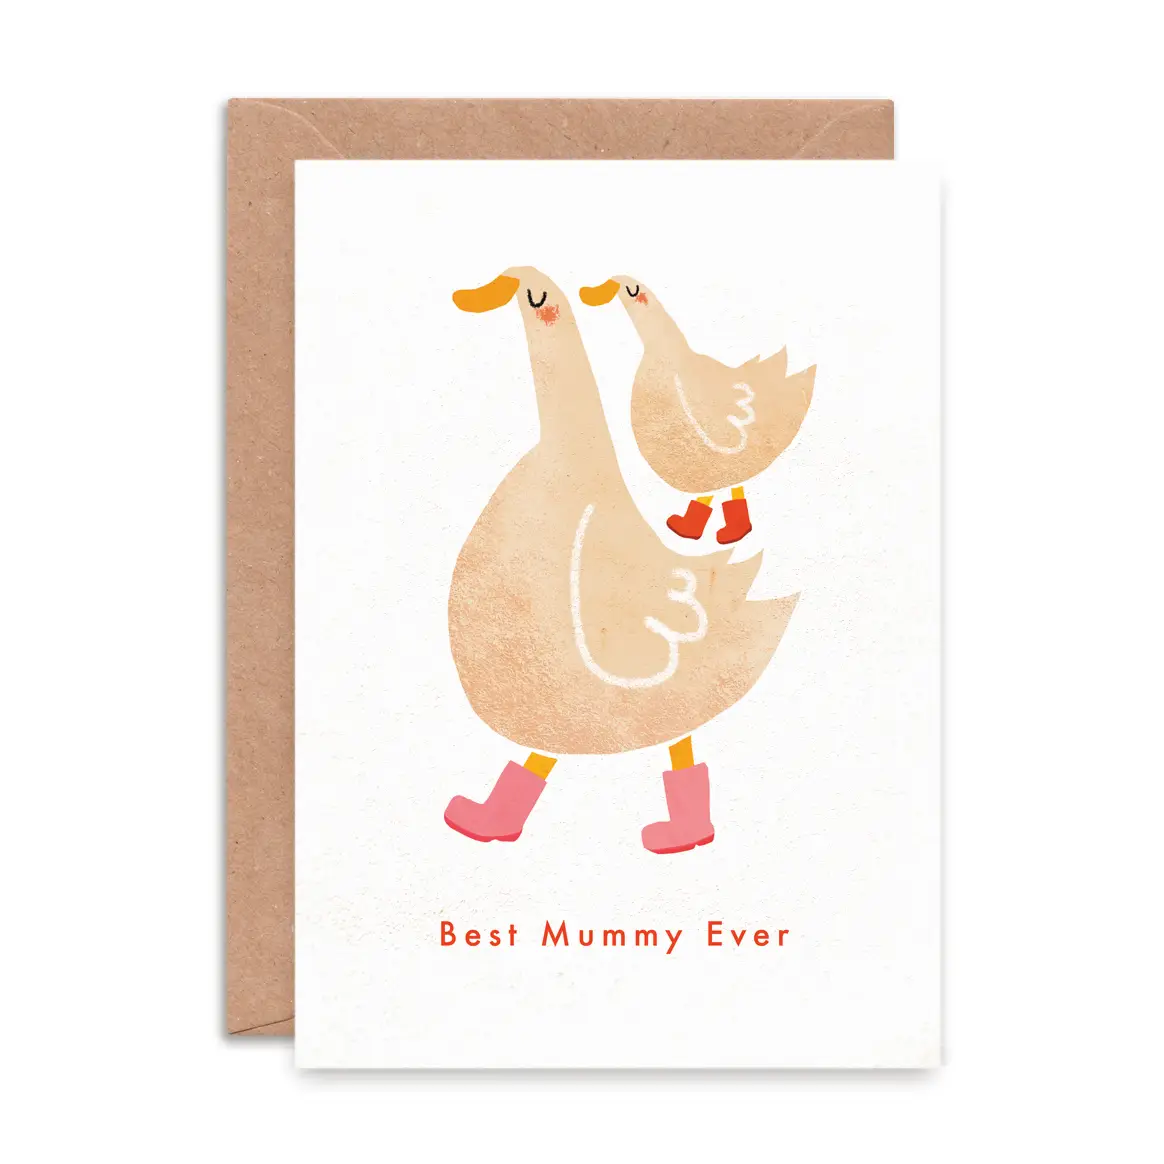 Emily Nash Illustration Best Mummy Ever Greeting Card